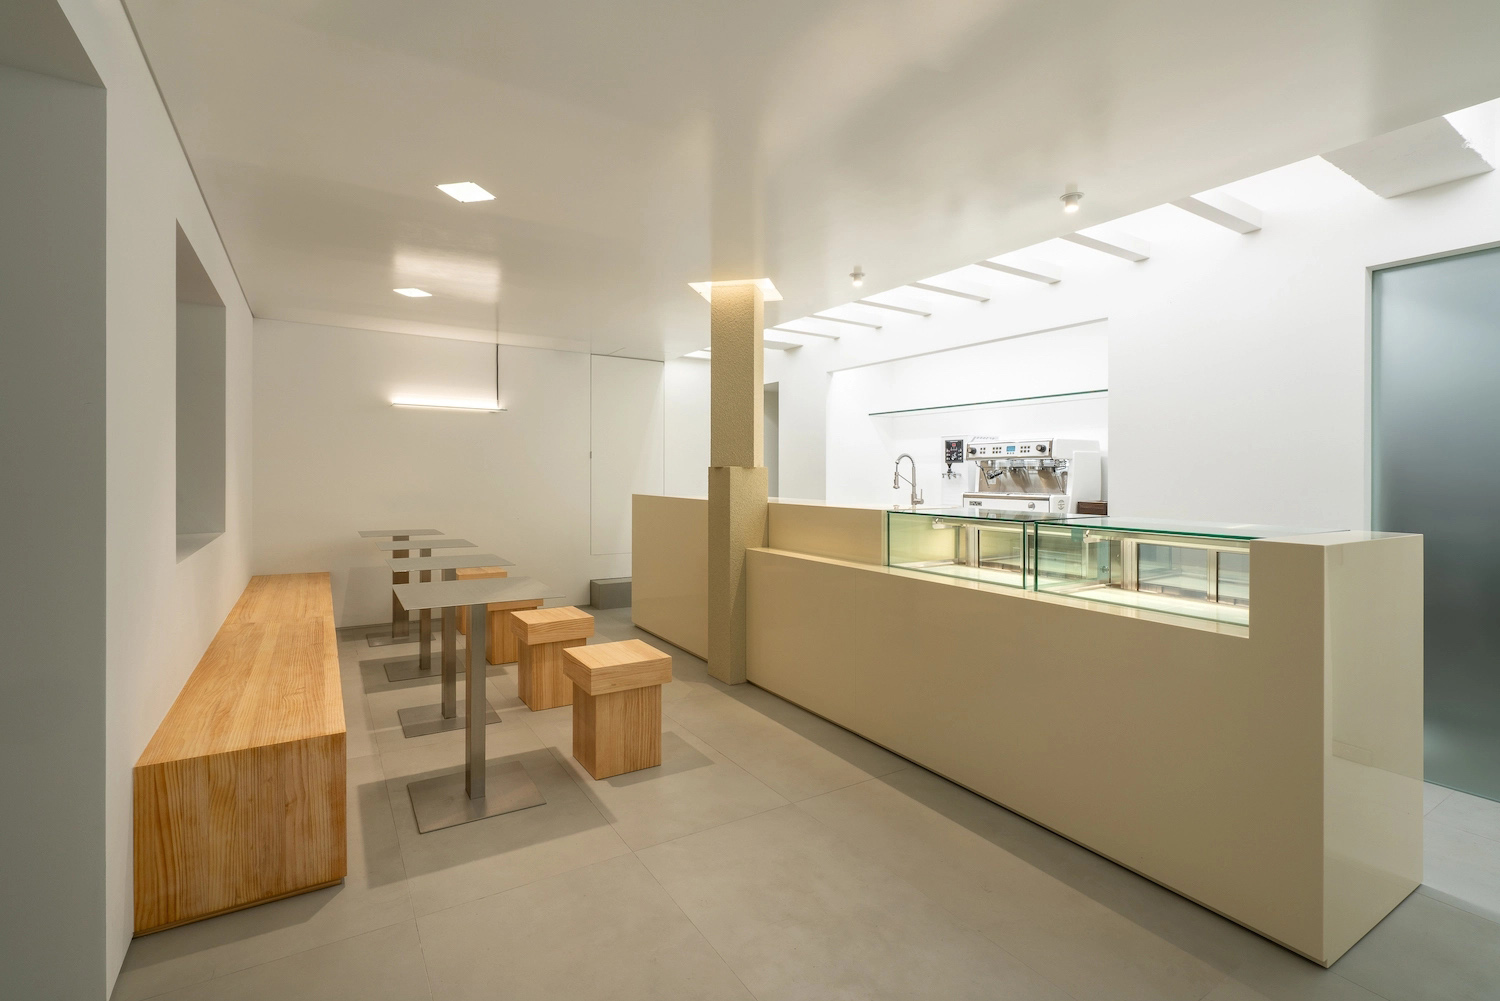 Project Mark,韩国,咖啡厅设计案例,咖啡厅装修,极简美学,极简风格,首尔,Pâtisserie Décidé,咖啡店